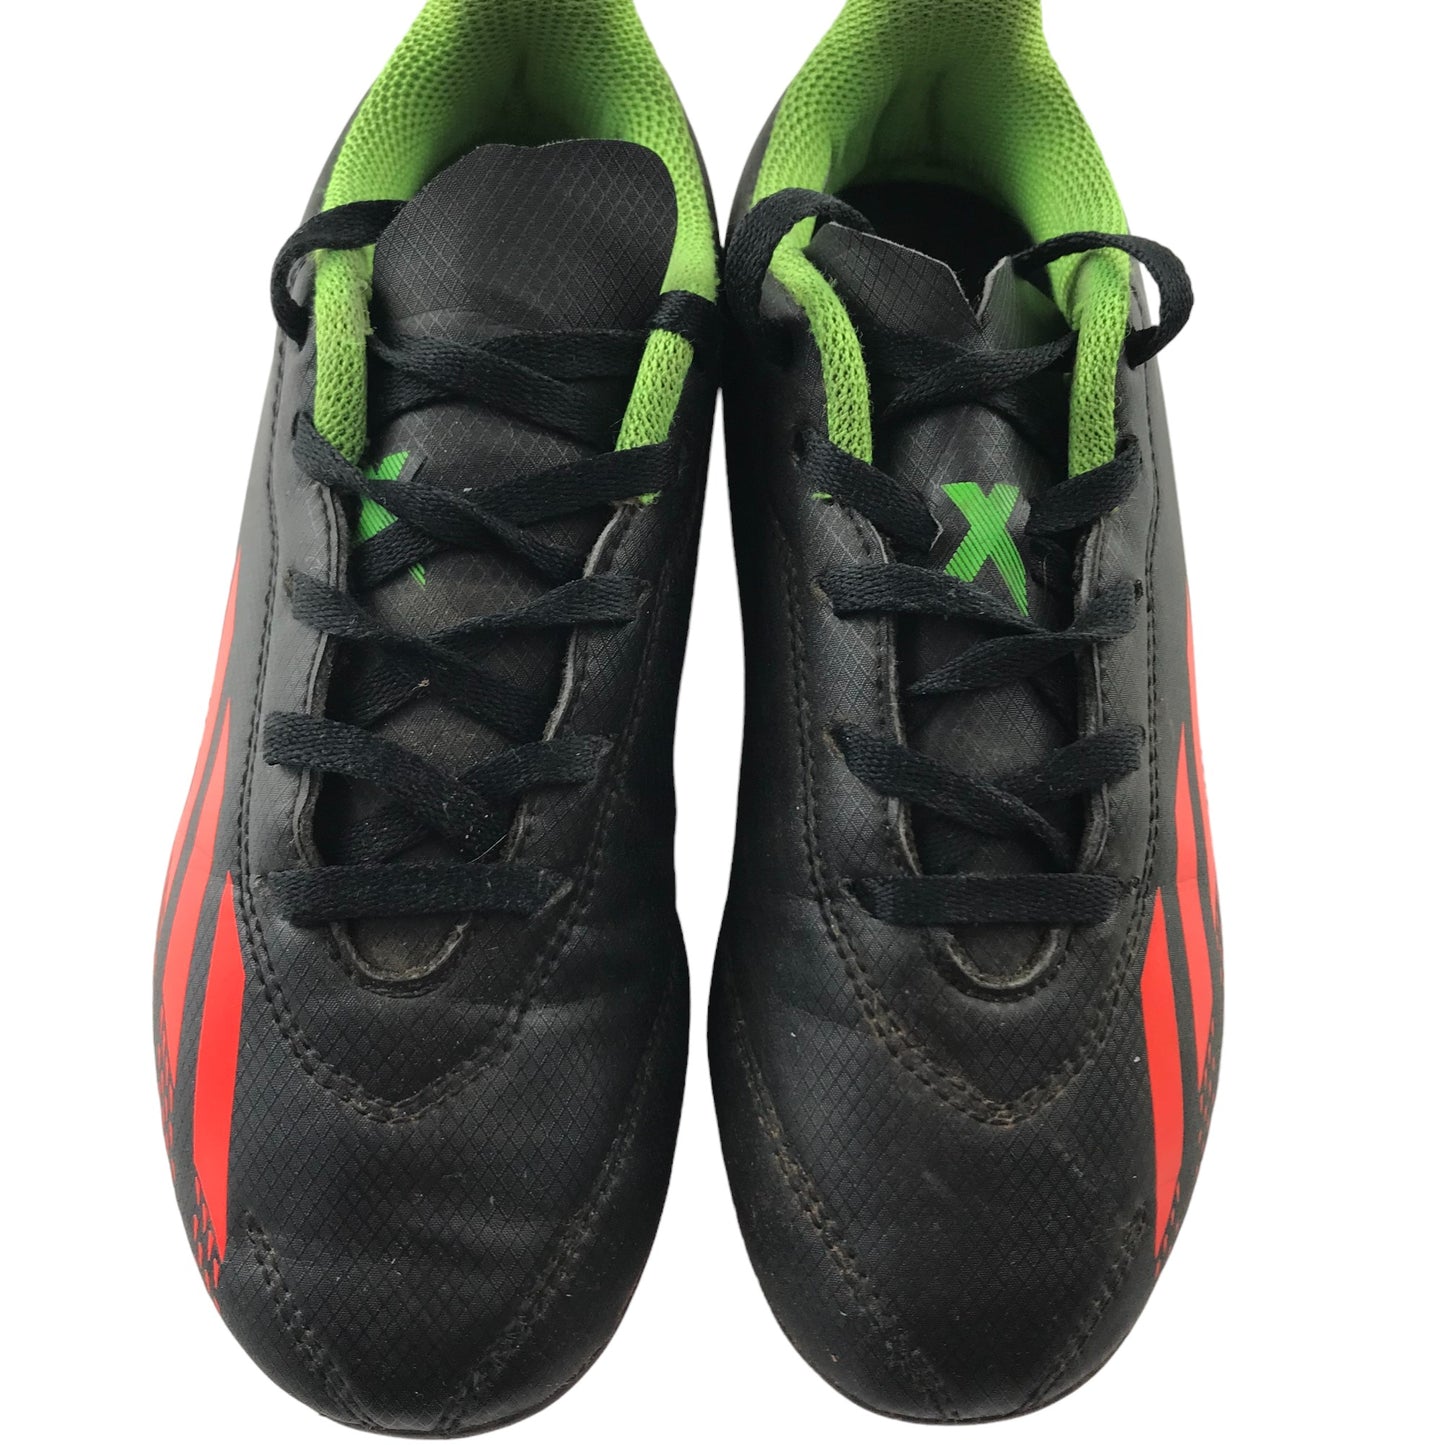 Adidas Football Boots Shoe Size 13k Junior Plastic Studs Orange Adidas Logo